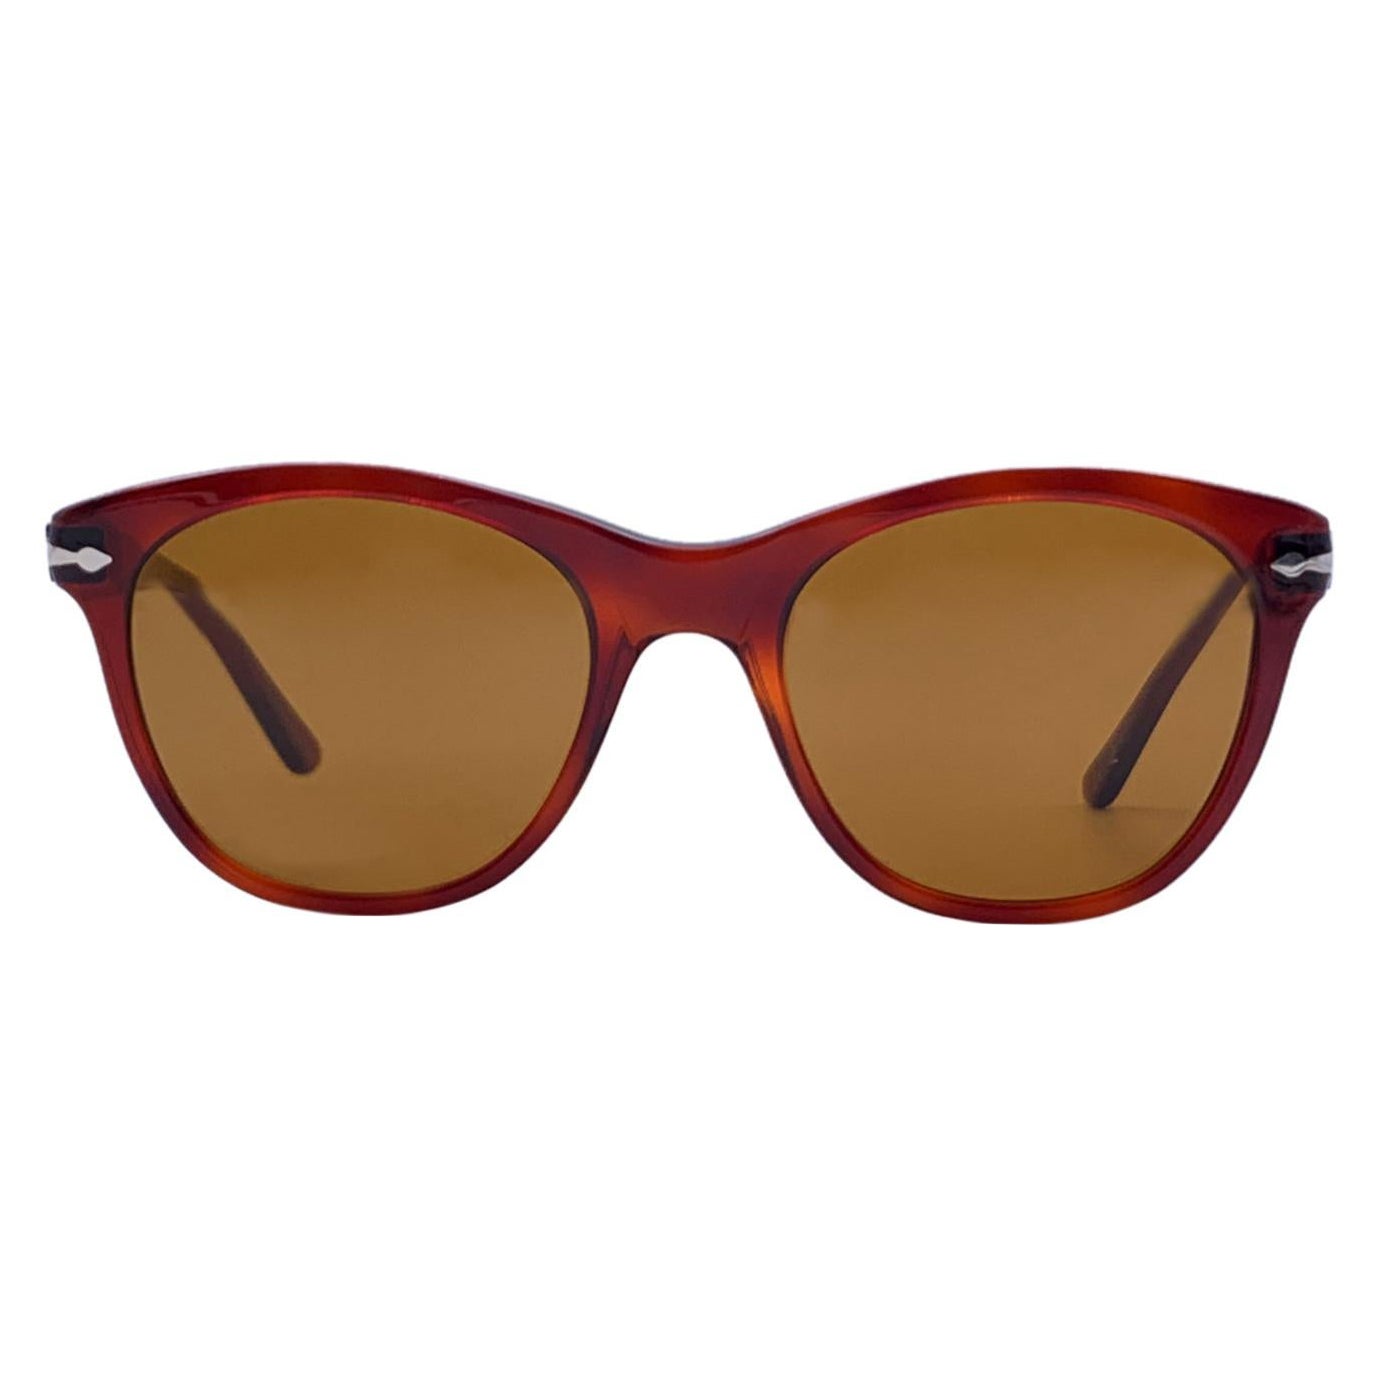 Persol Ratti Vintage Brown Sunglasses Mod. 69238 50/14 130mm